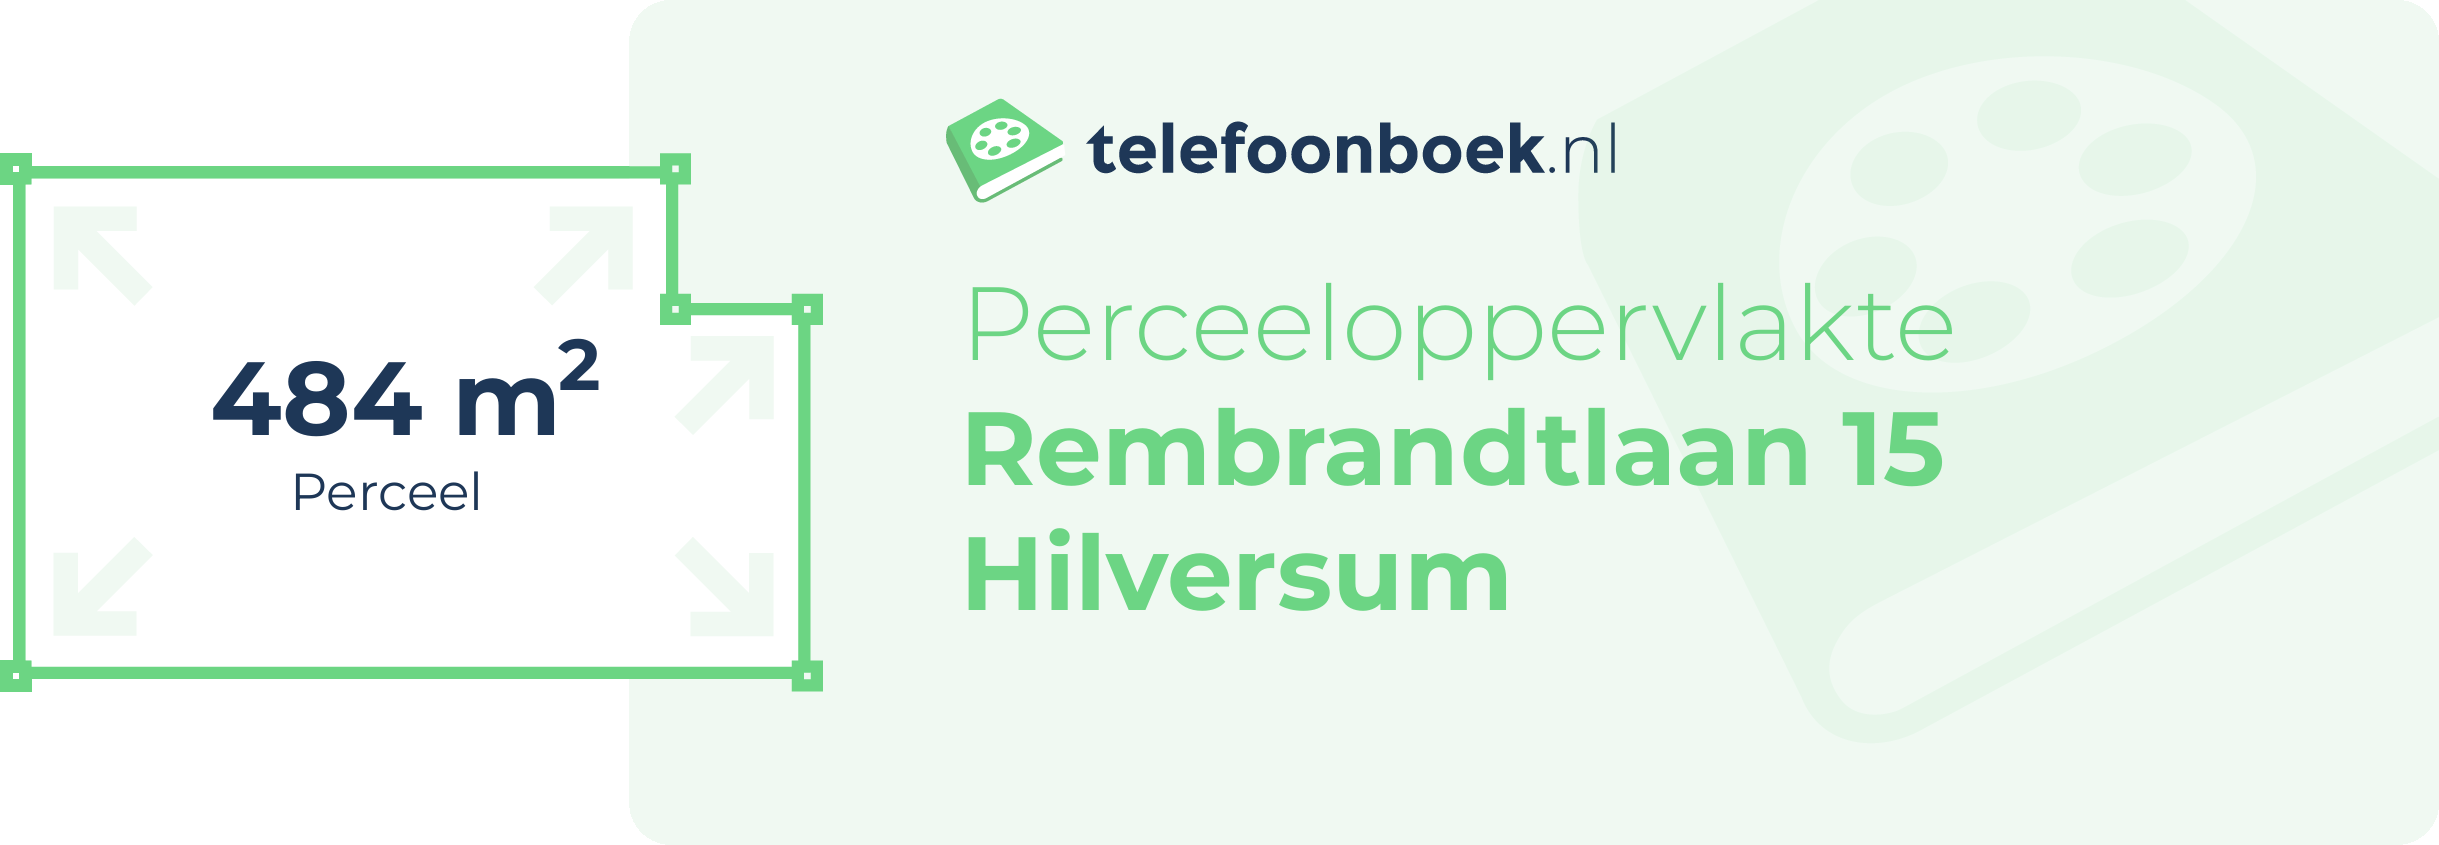 Perceeloppervlakte Rembrandtlaan 15 Hilversum